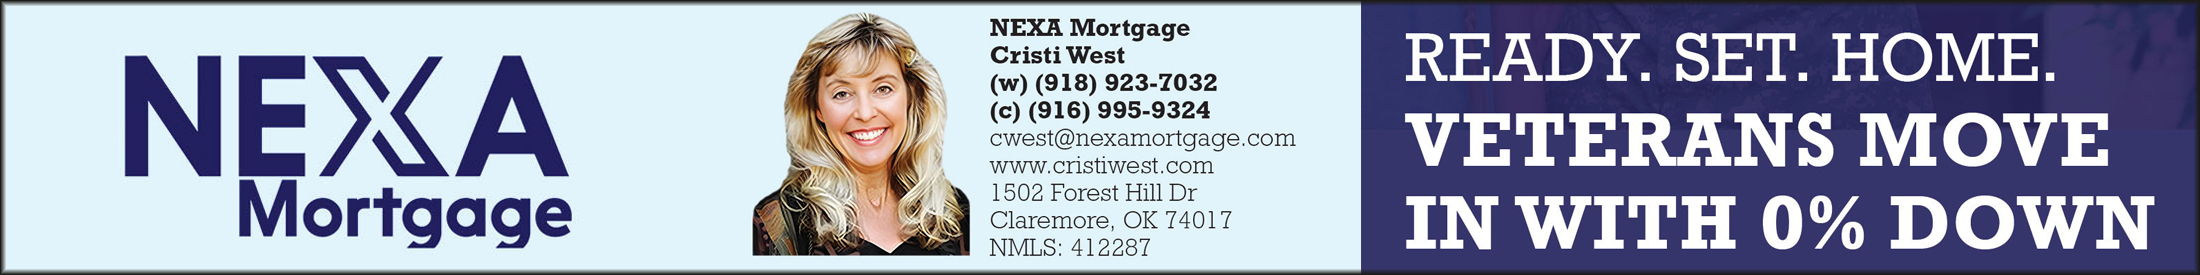 Image of Nexa Mortgage Advertisement